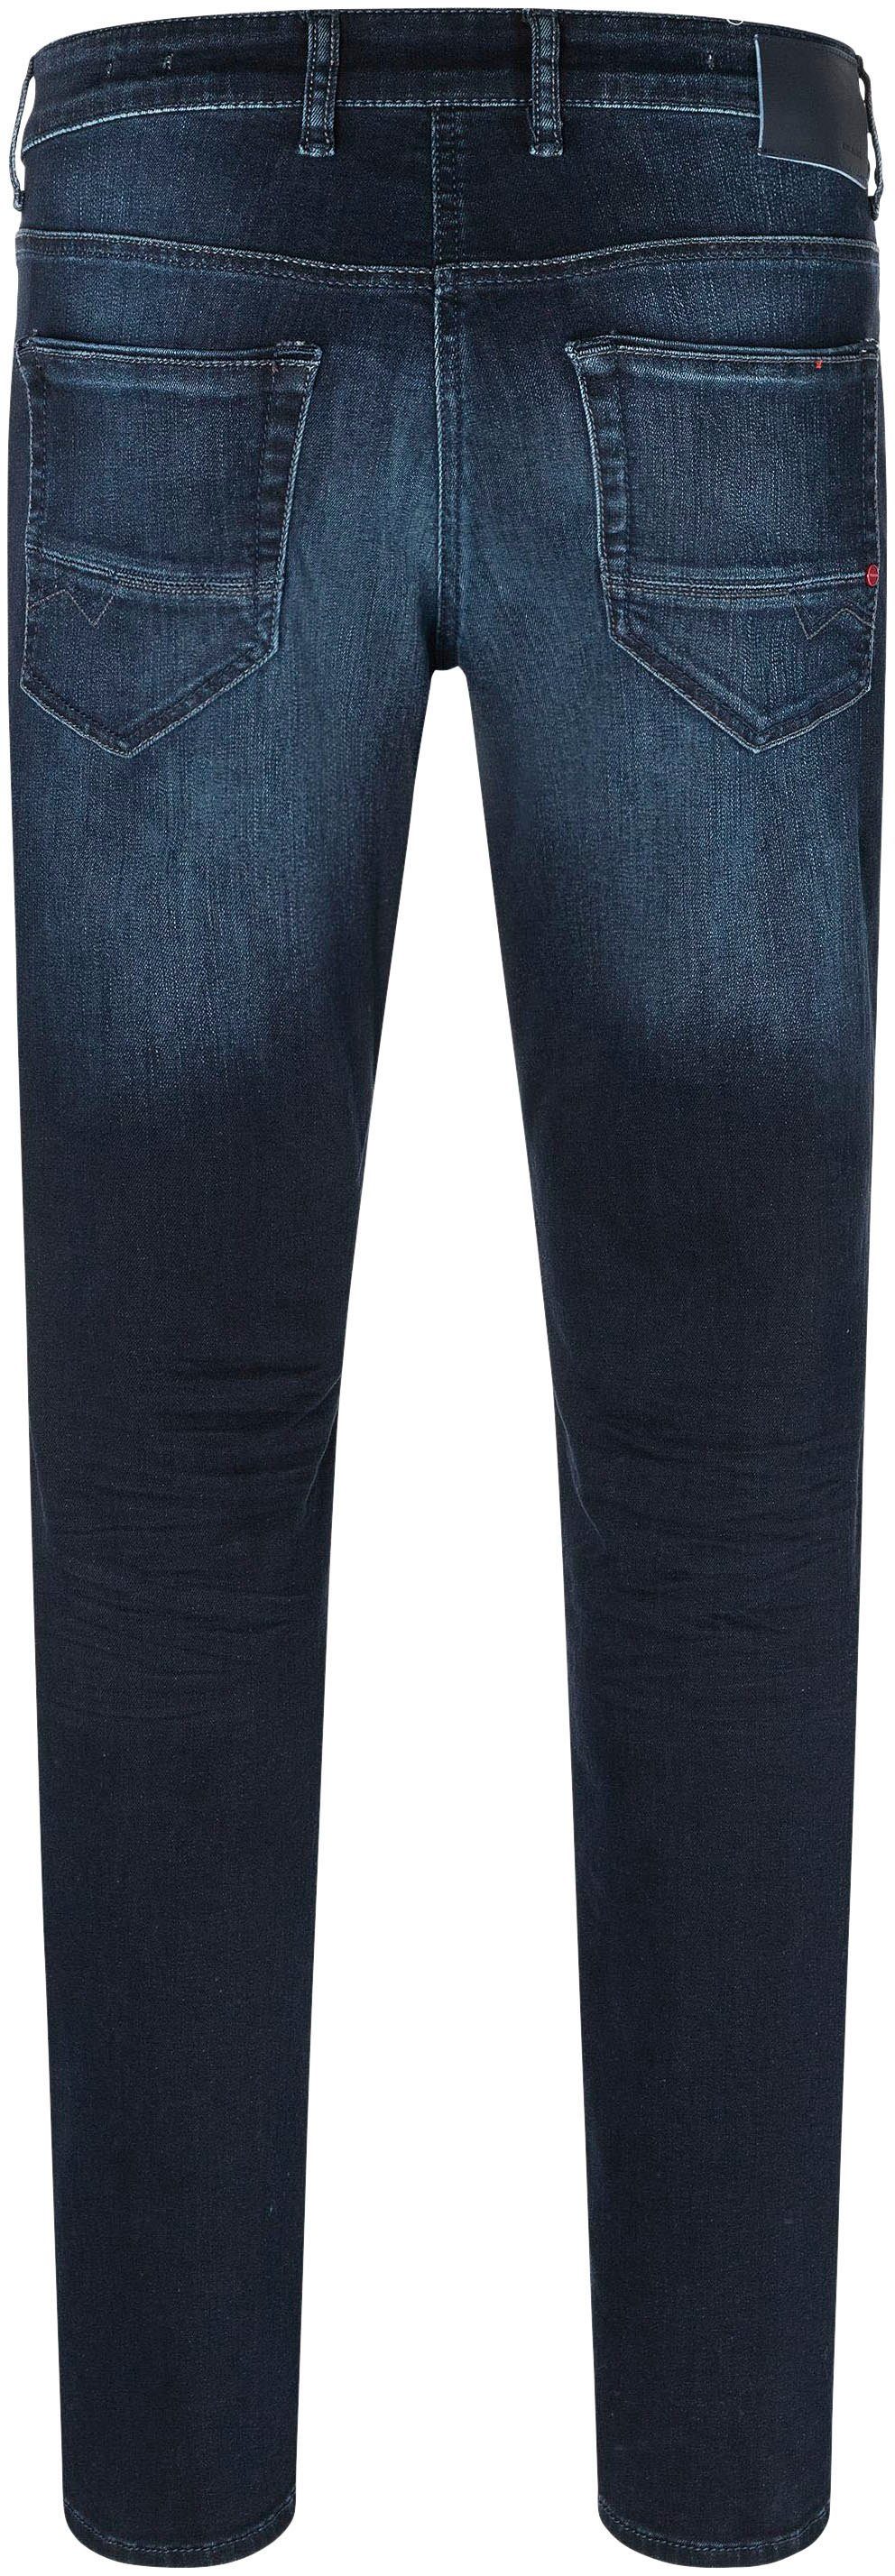 MAC Pipe Arne Straight-Jeans blue-black